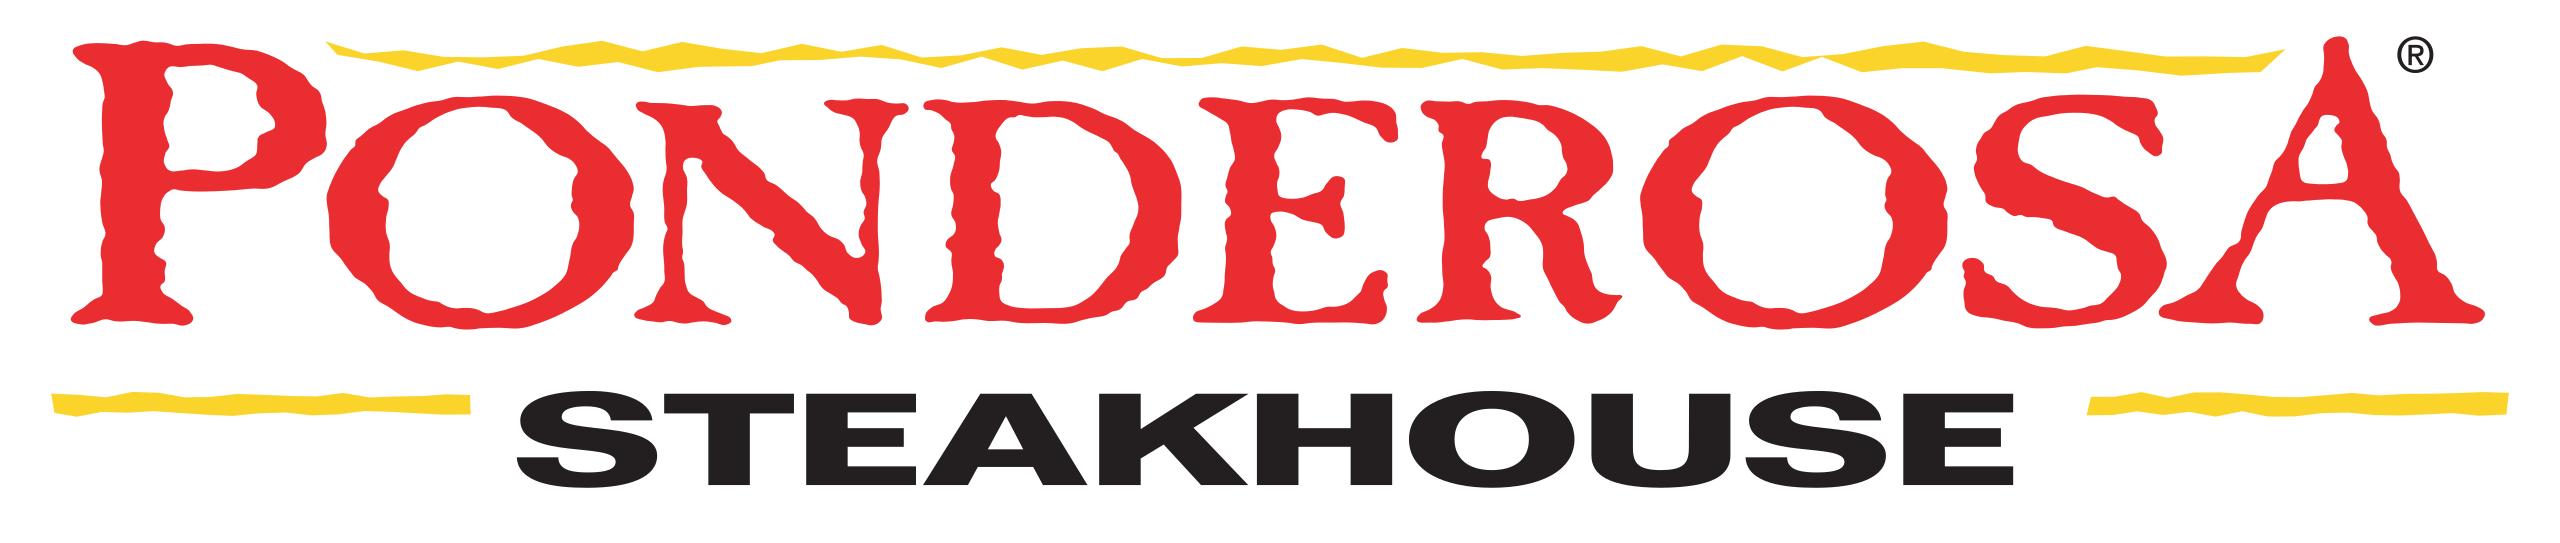 Ponderosa Steakhouse logo